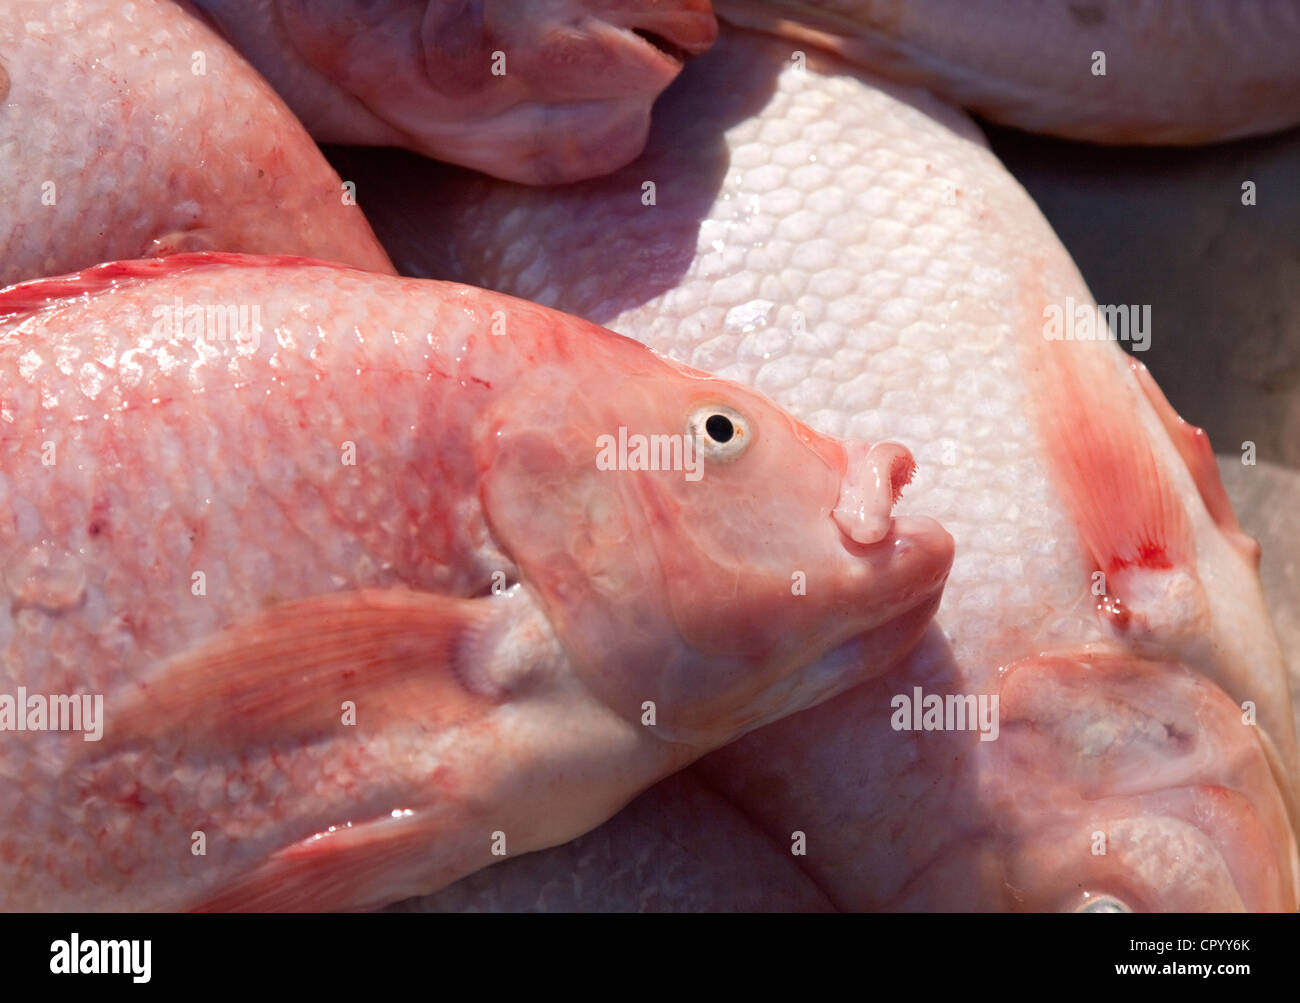 Appena catturati Lutianido (Lutjanus campechanus) su un mercato del pesce, Thailandia, Sud-est asiatico, in Asia Foto Stock